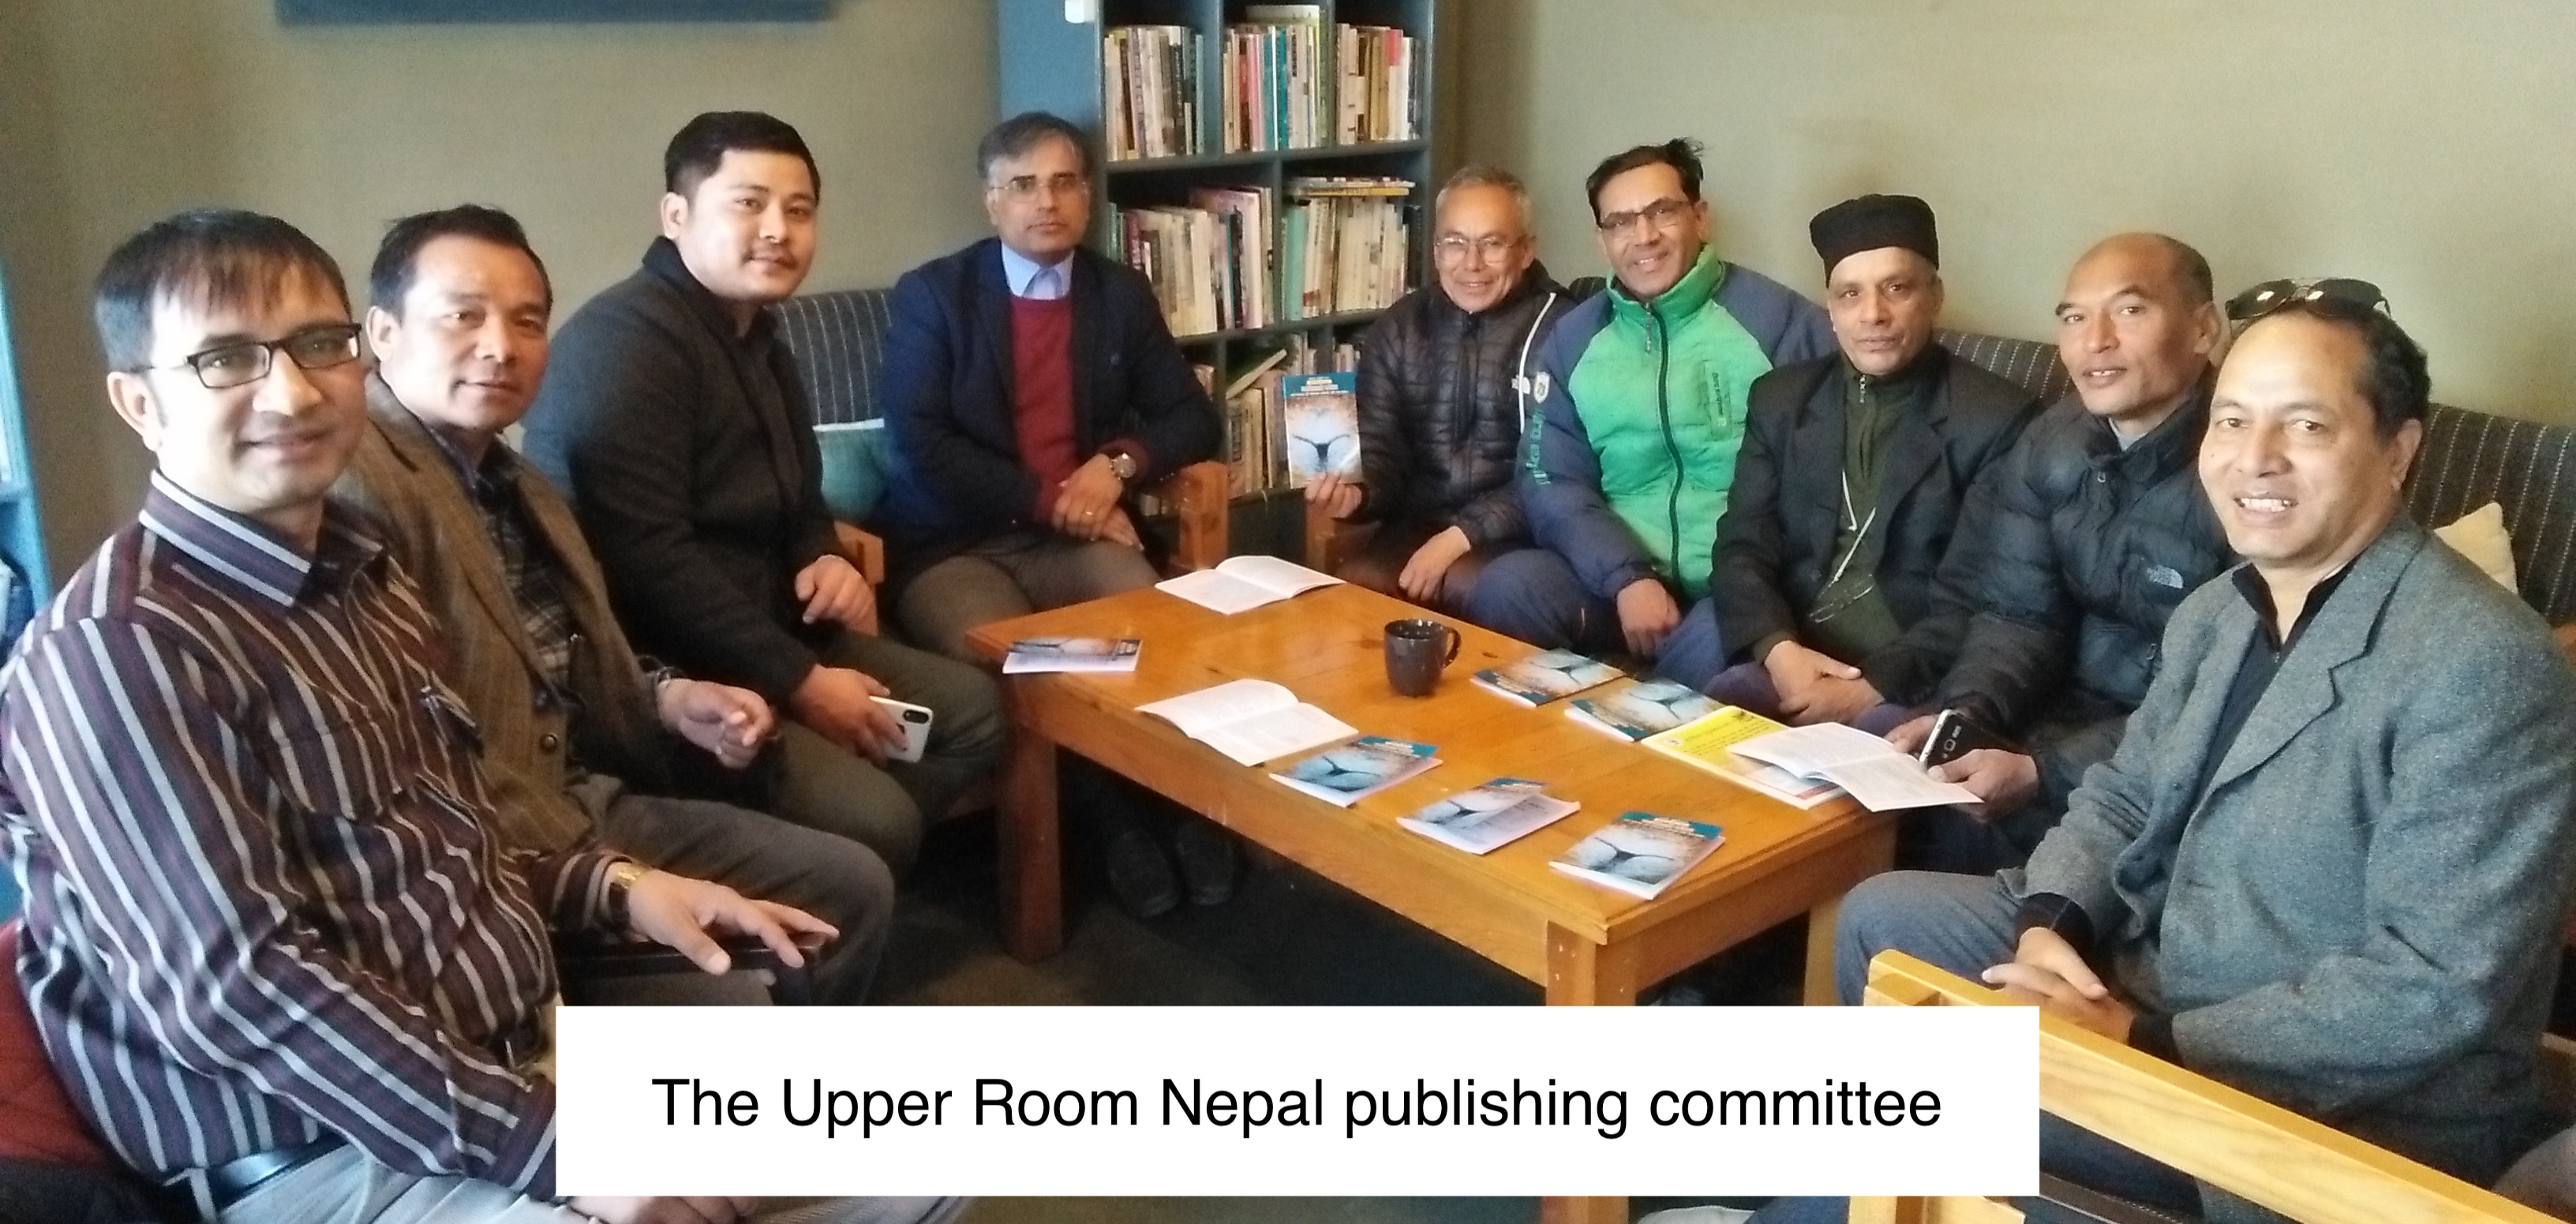 UR Nepal publishing committee w caption.jpg